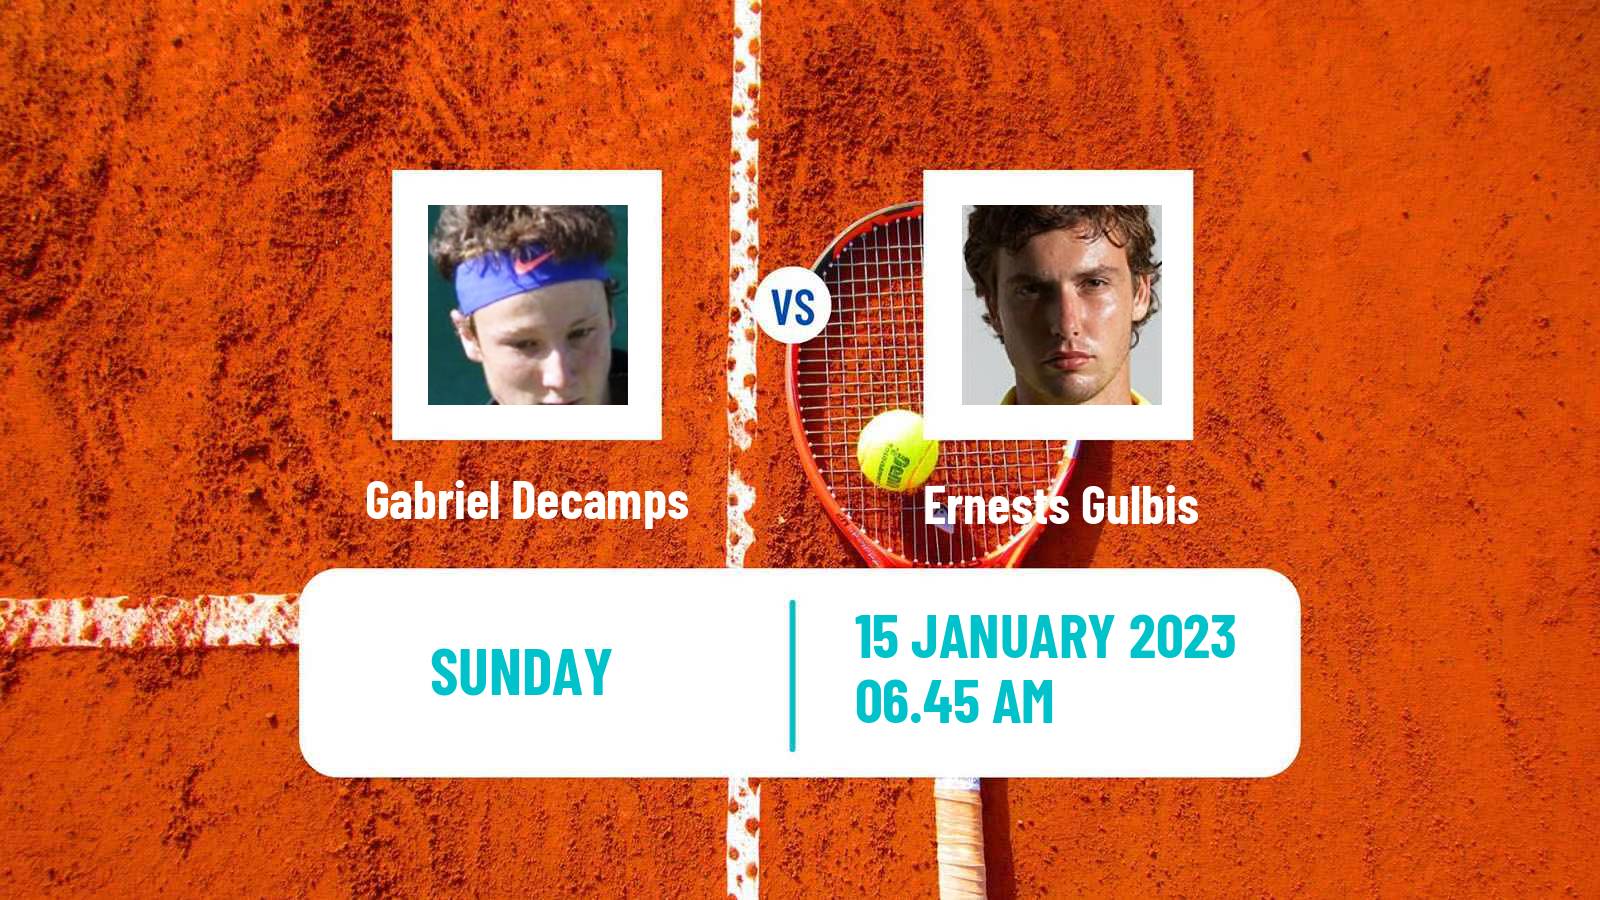 Tennis ATP Challenger Gabriel Decamps - Ernests Gulbis